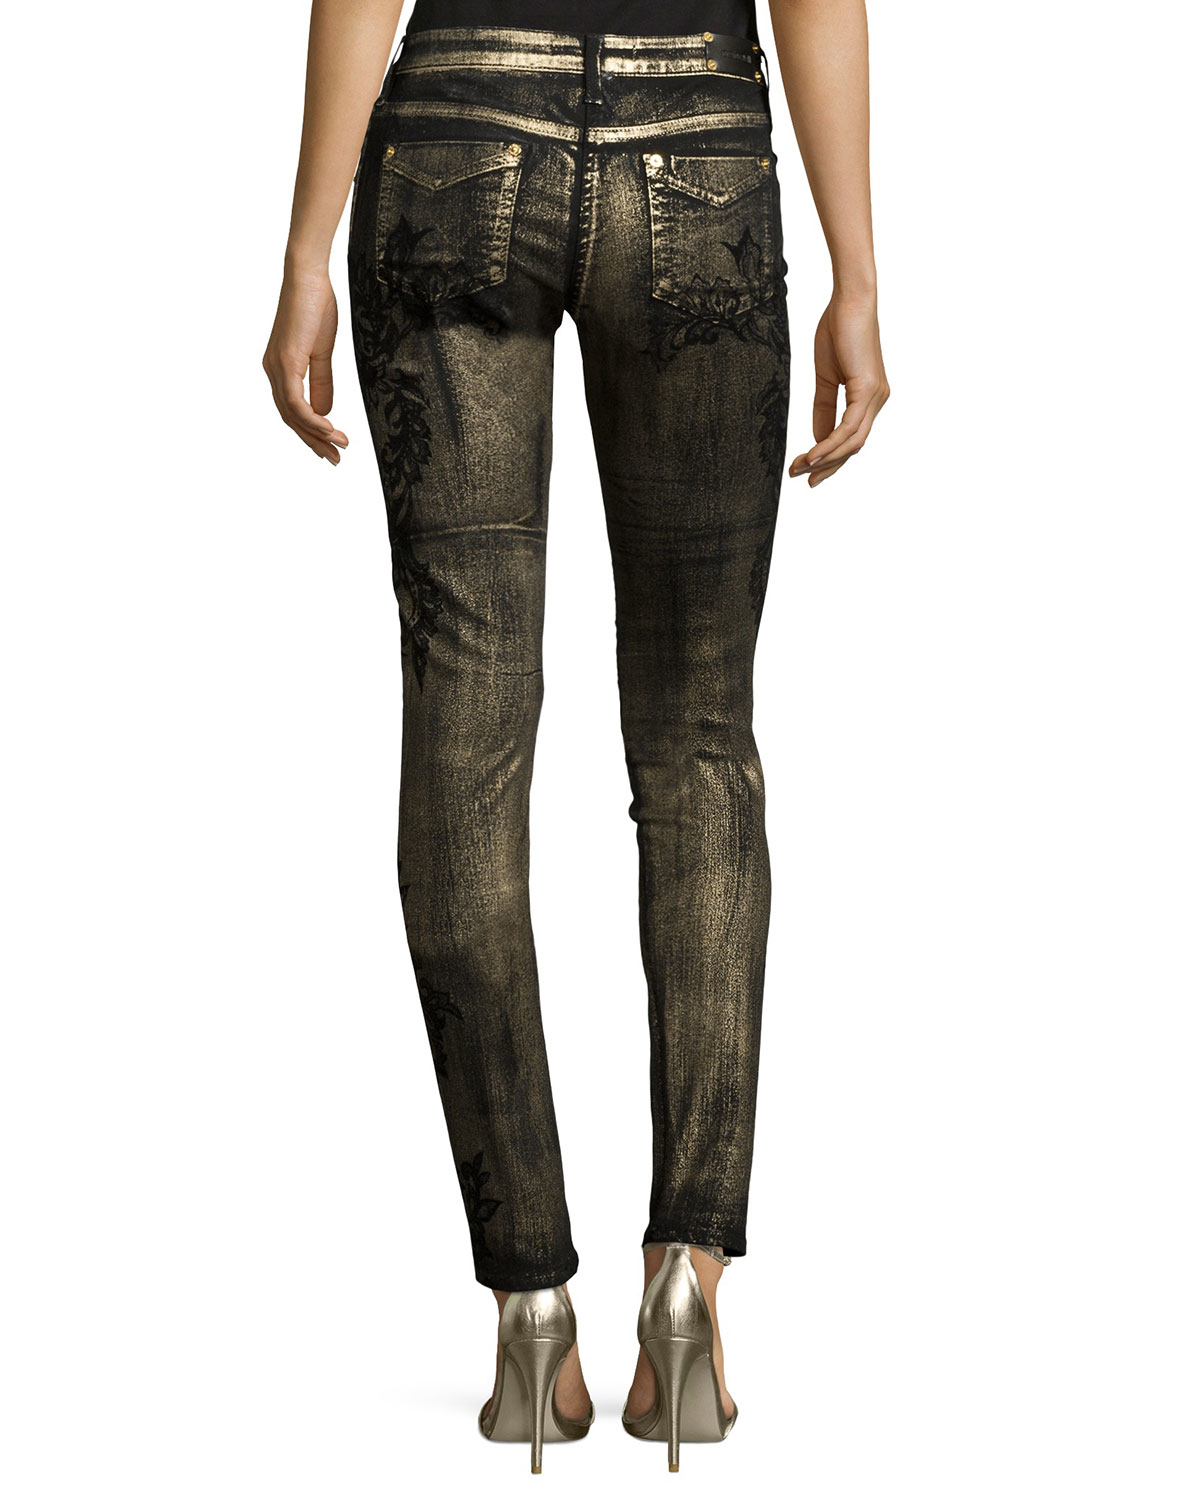 Roberto cavalli Skinny-leg Metallic Printed Jeans in Metallic | Lyst